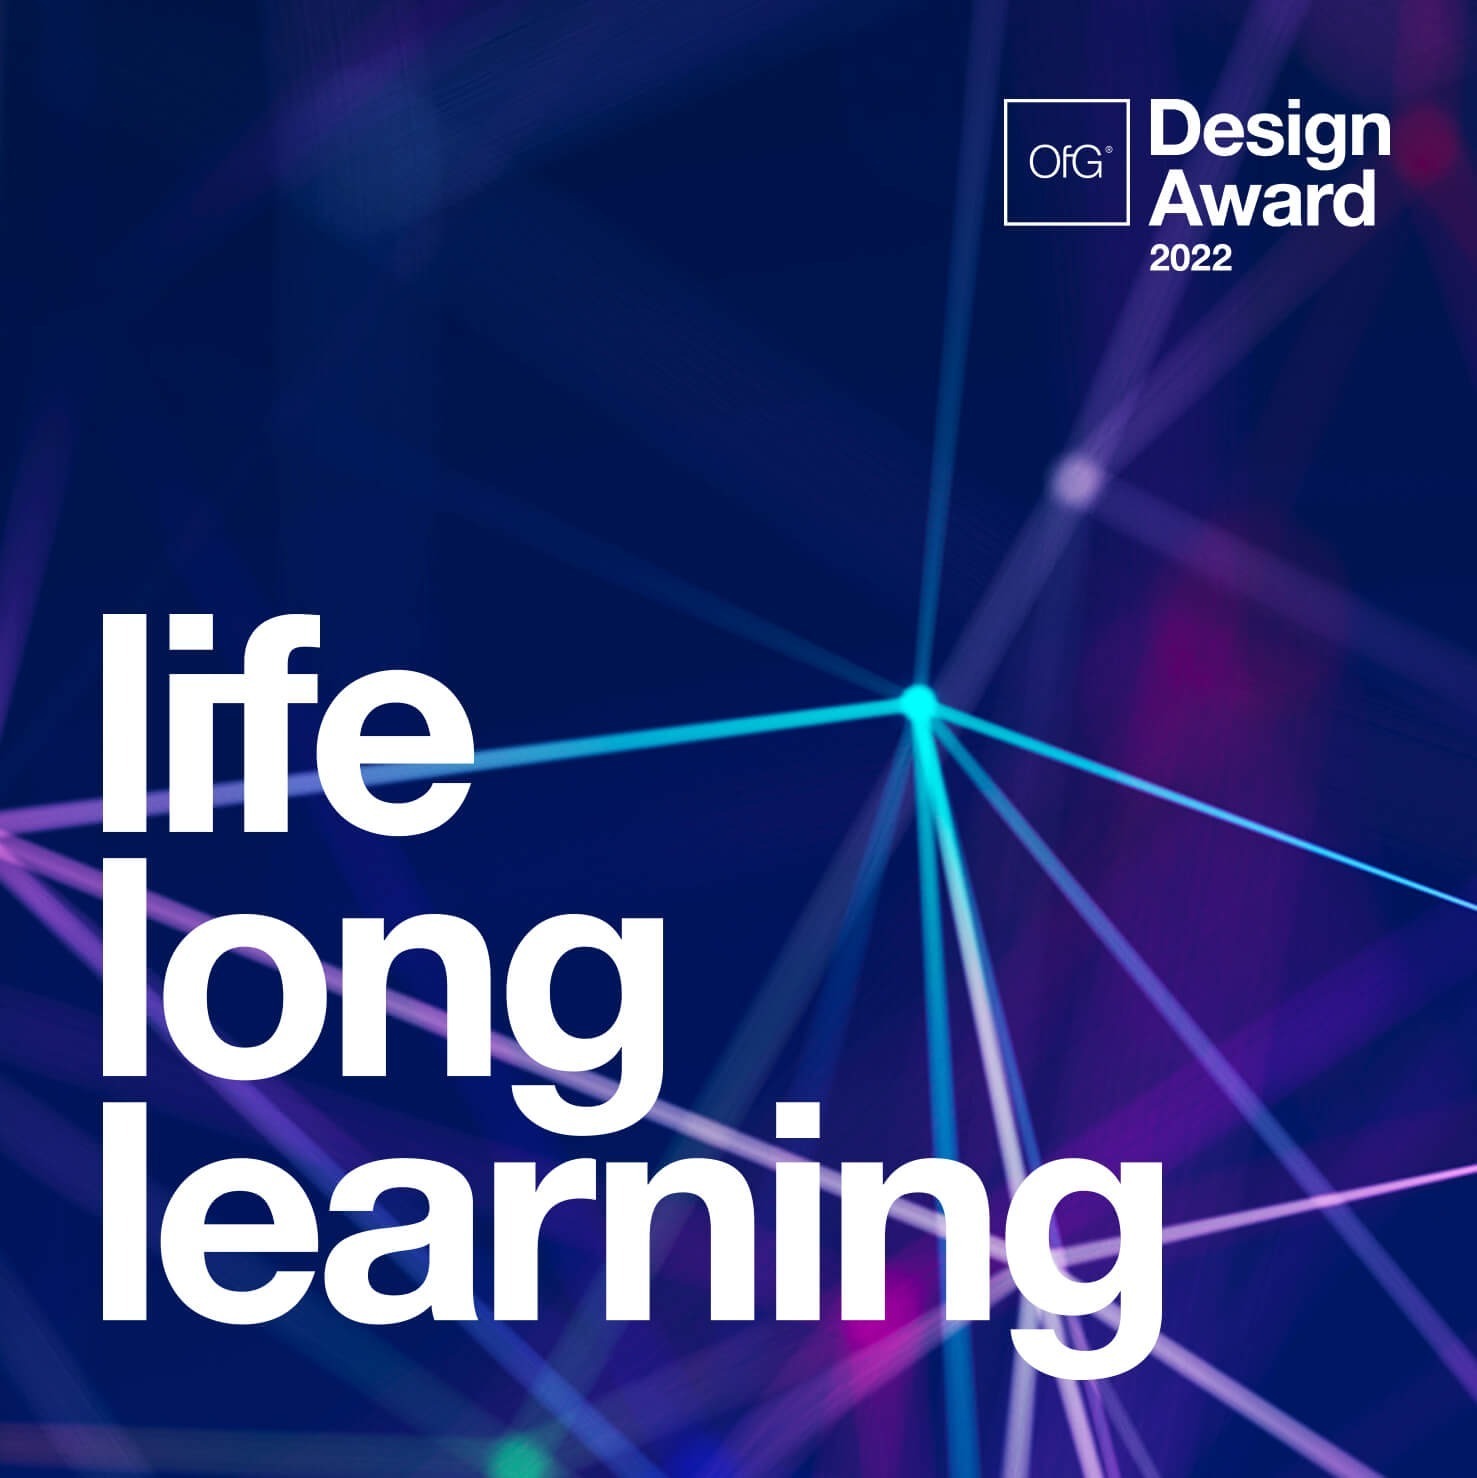 Webseite_Image_OfG_Design_Award_2022_01-3-quadrat